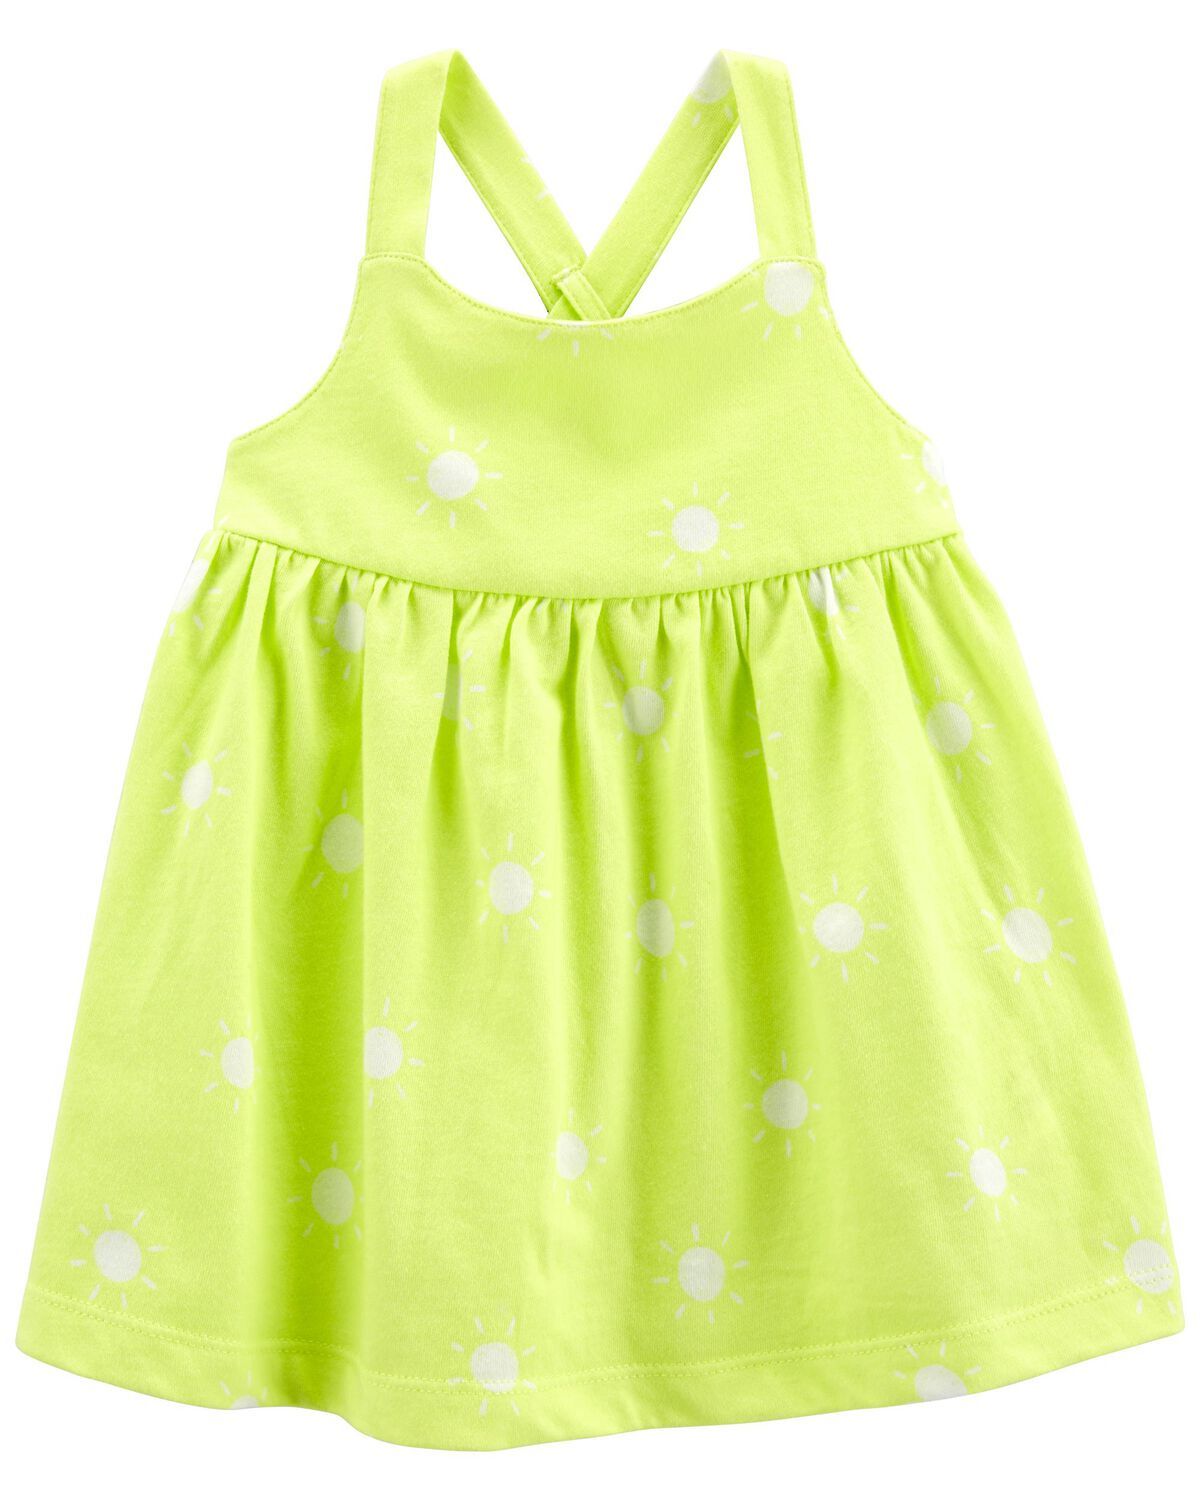 Neon Yellow Baby Polka Dot Jersey Dress | carters.com | Carter's